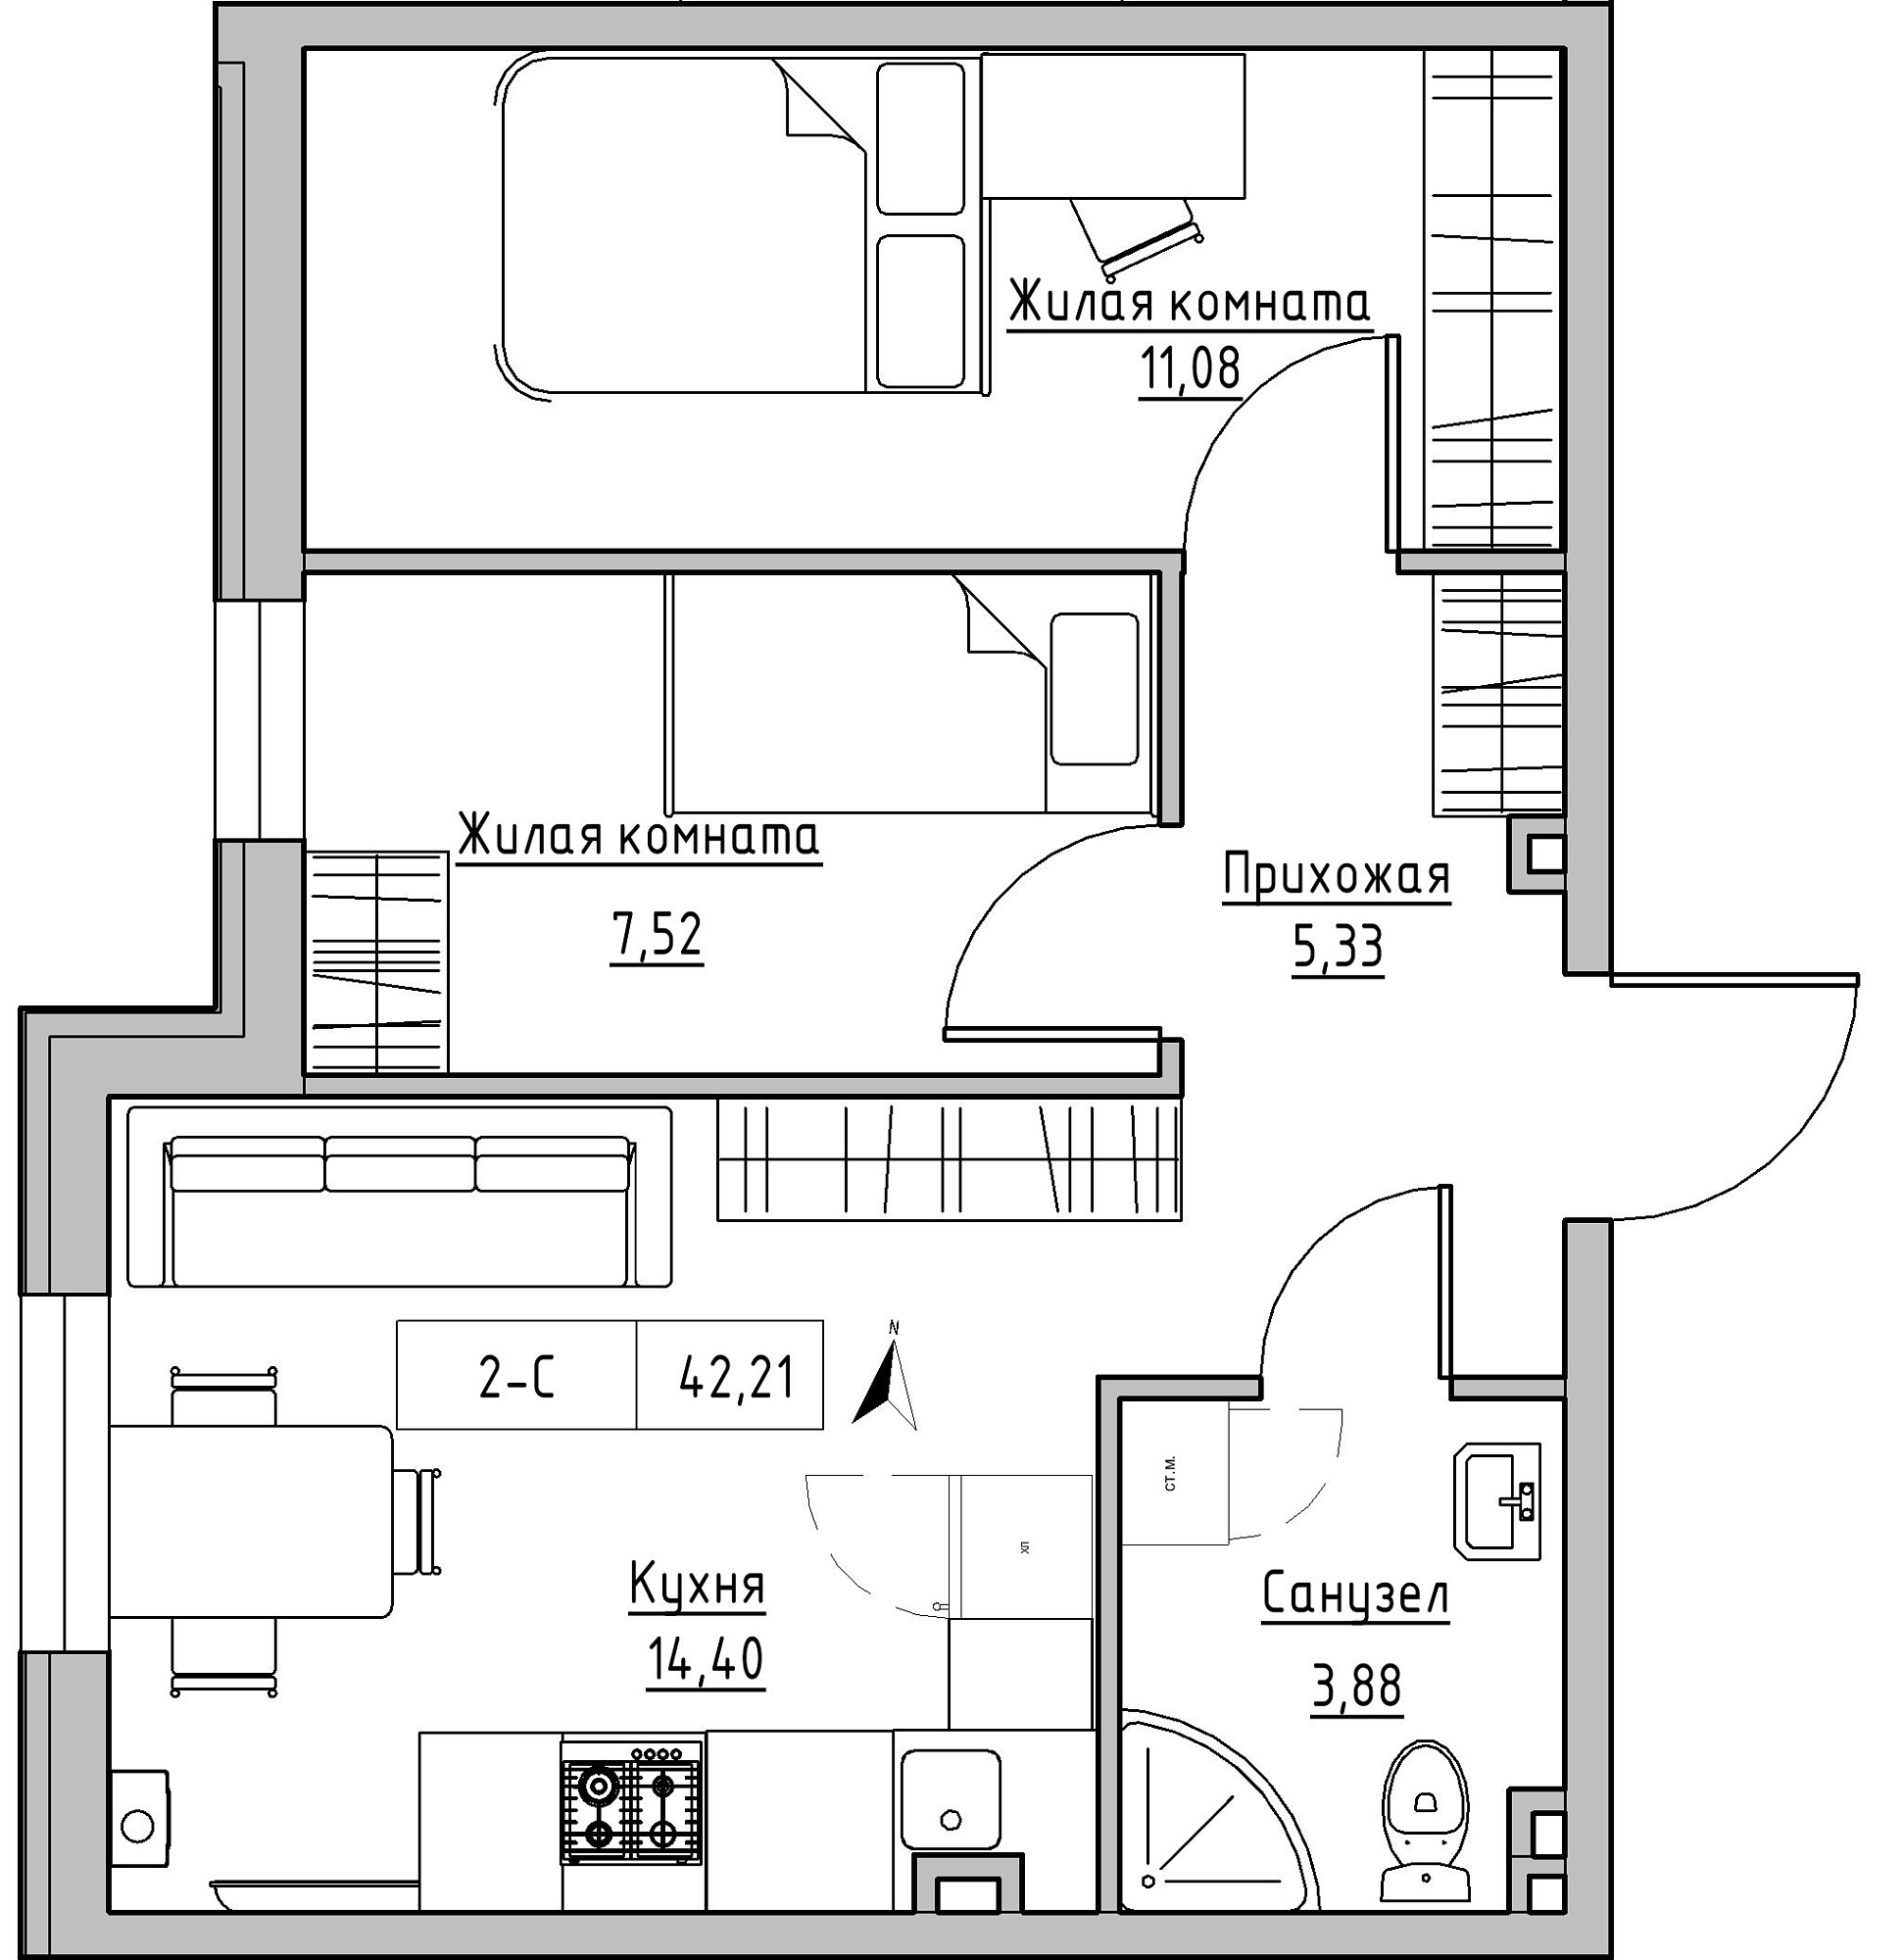 Planning 2-rm flats area 42.21m2, KS-024-01/0010.